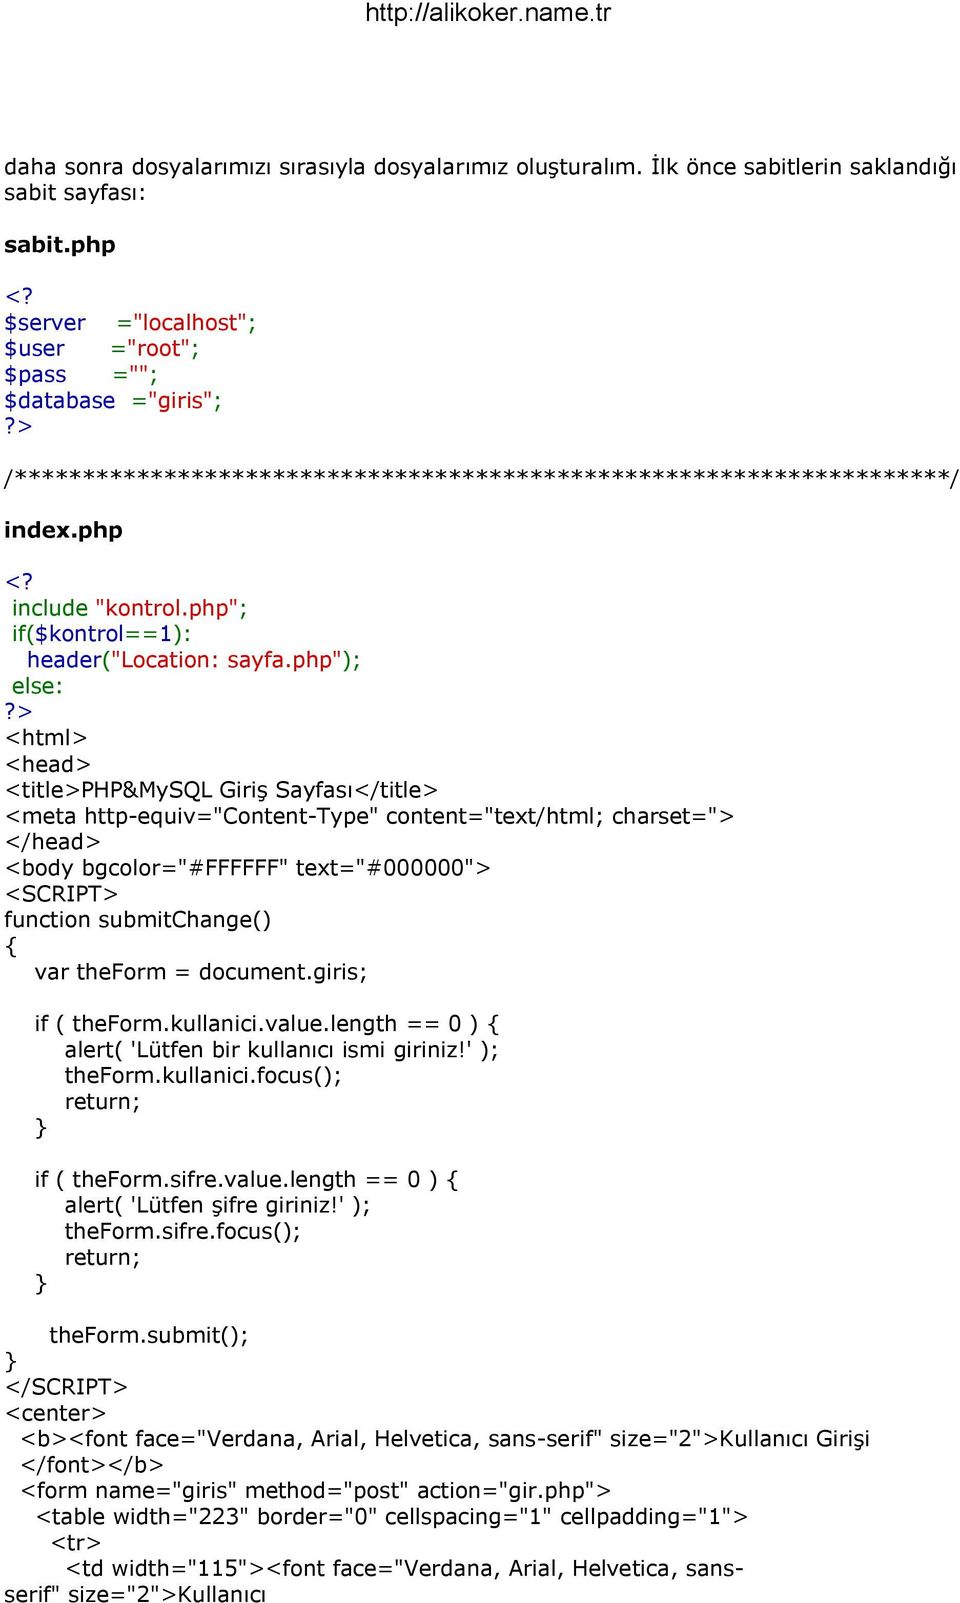 php"); else: <html> <head> <title>php&mysql Giriş Sayfası</title> <meta http-equiv="content-type" content="text/html; charset="> </head> <body bgcolor="#ffffff" text="#000000"> <SCRIPT> function